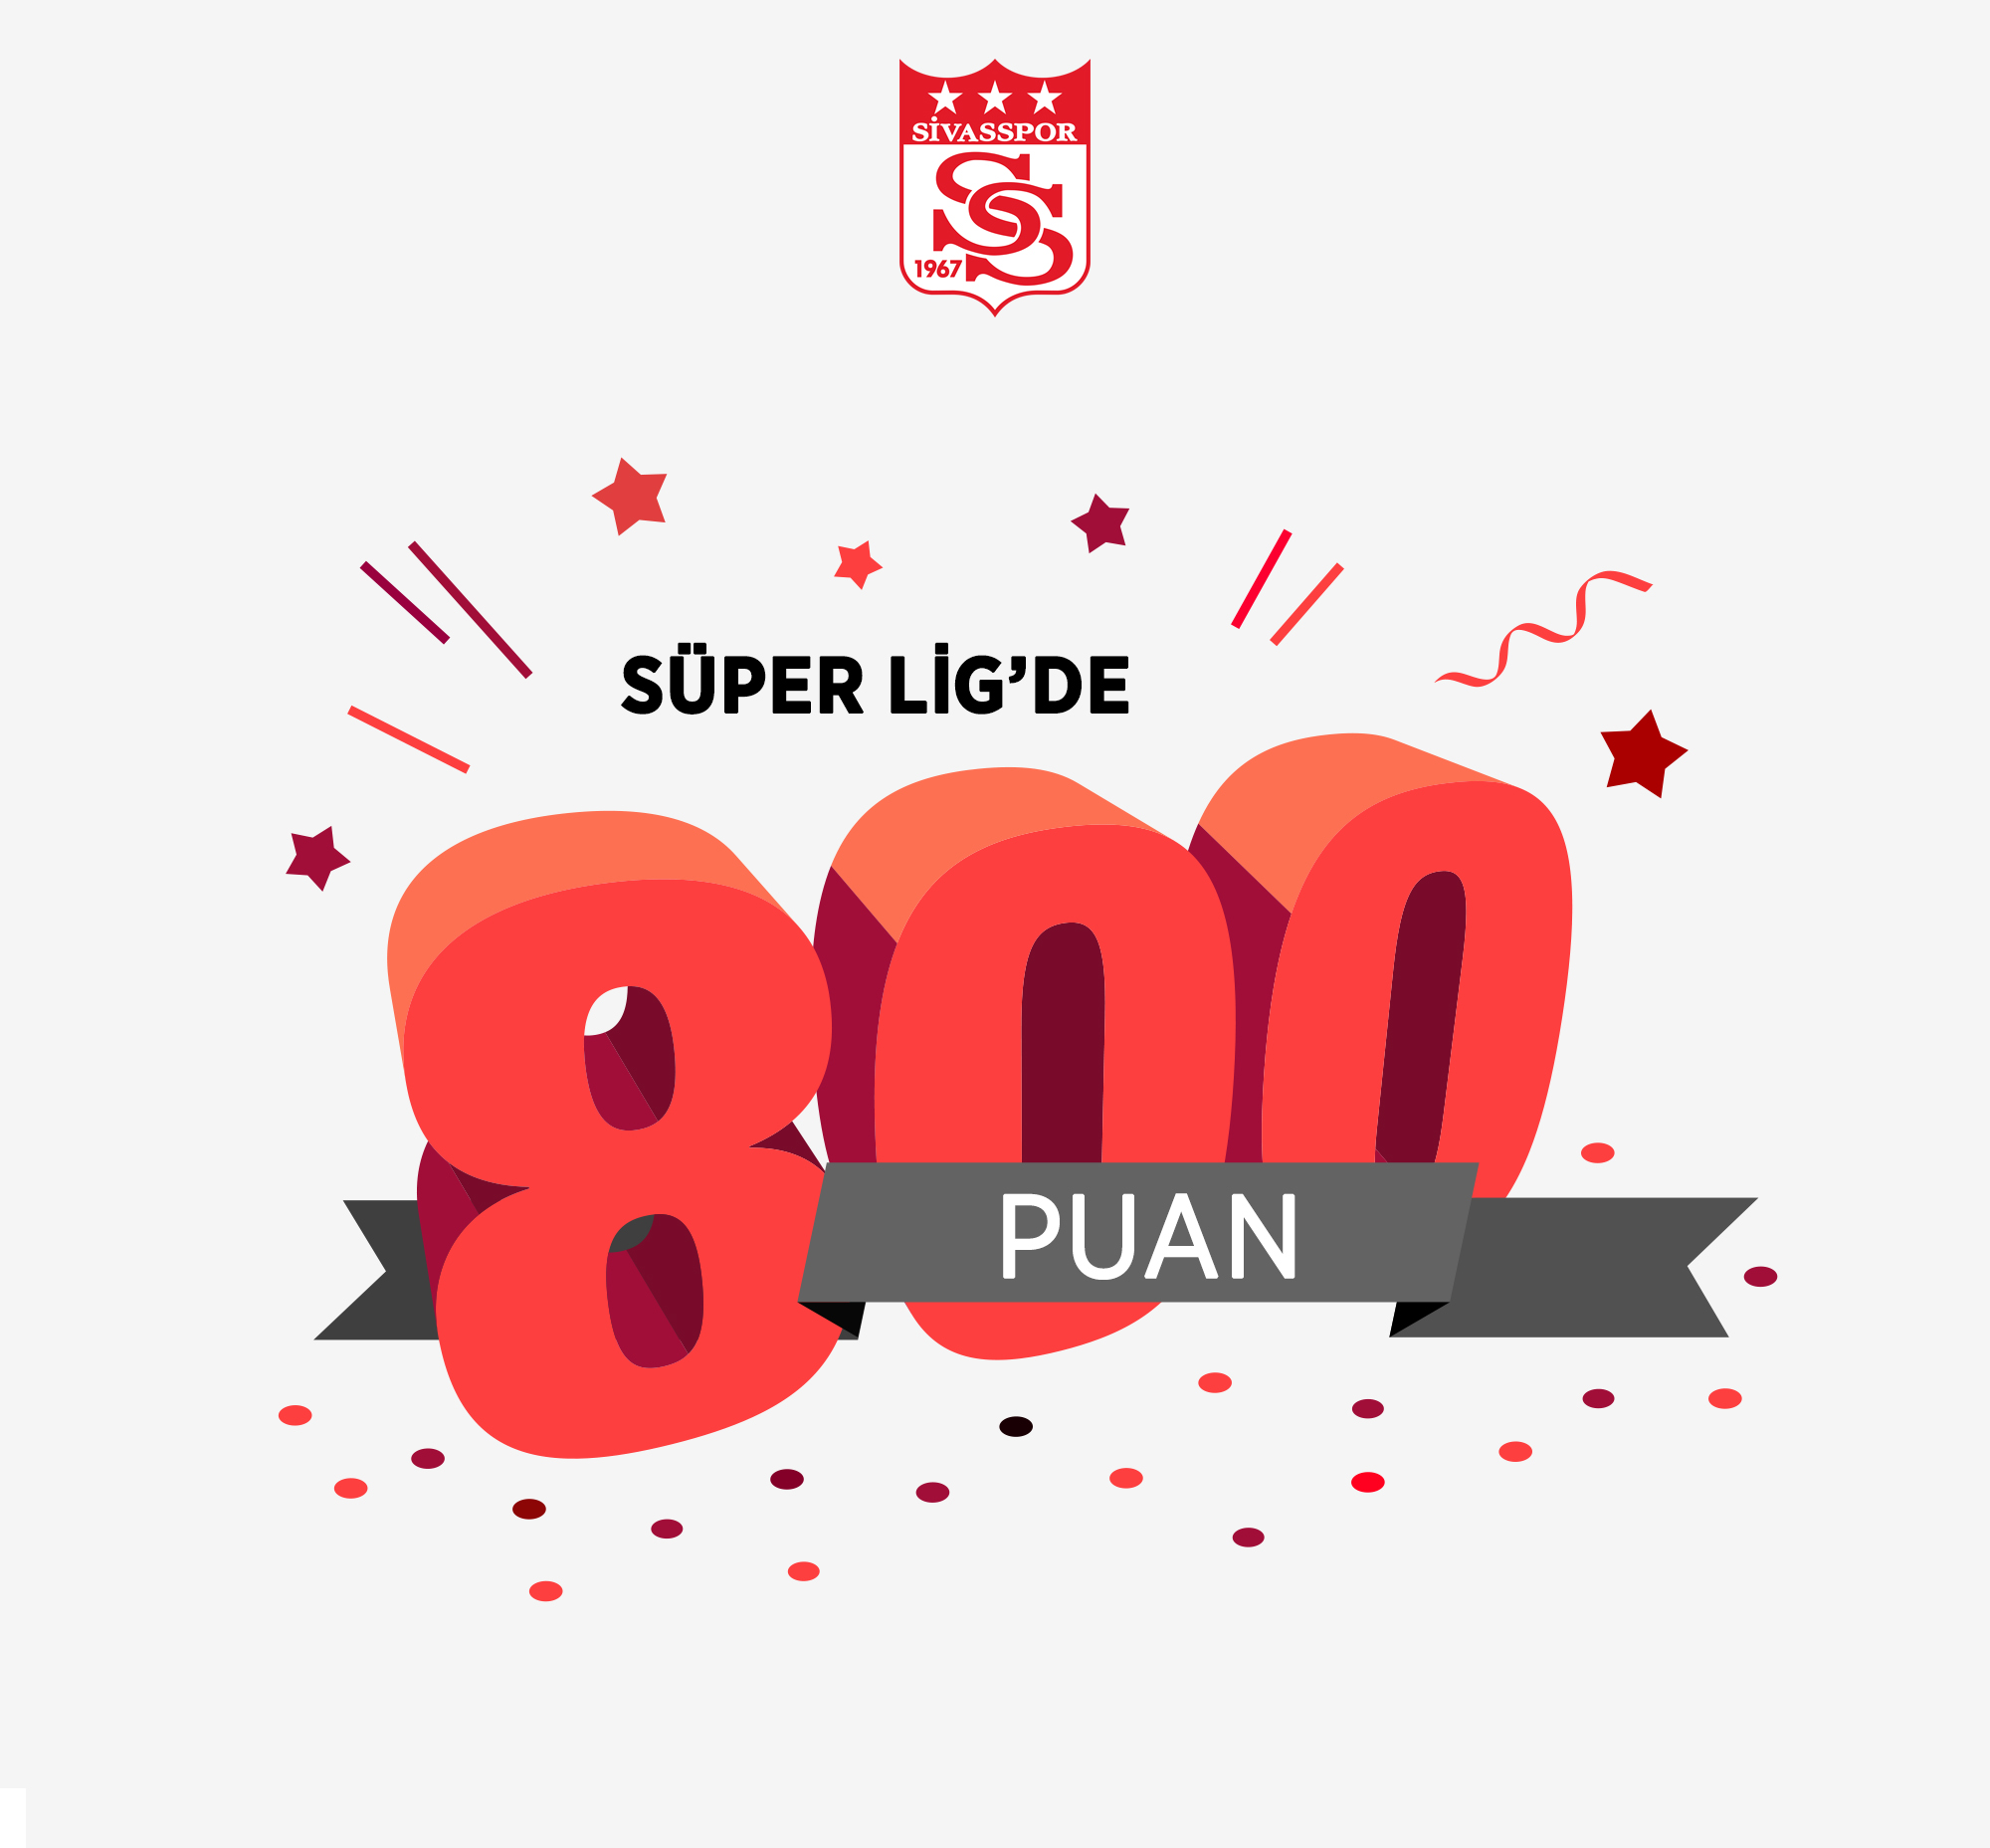 Demir Grup Sivasspor Süper Lig’de 800 Puana Ulaştı